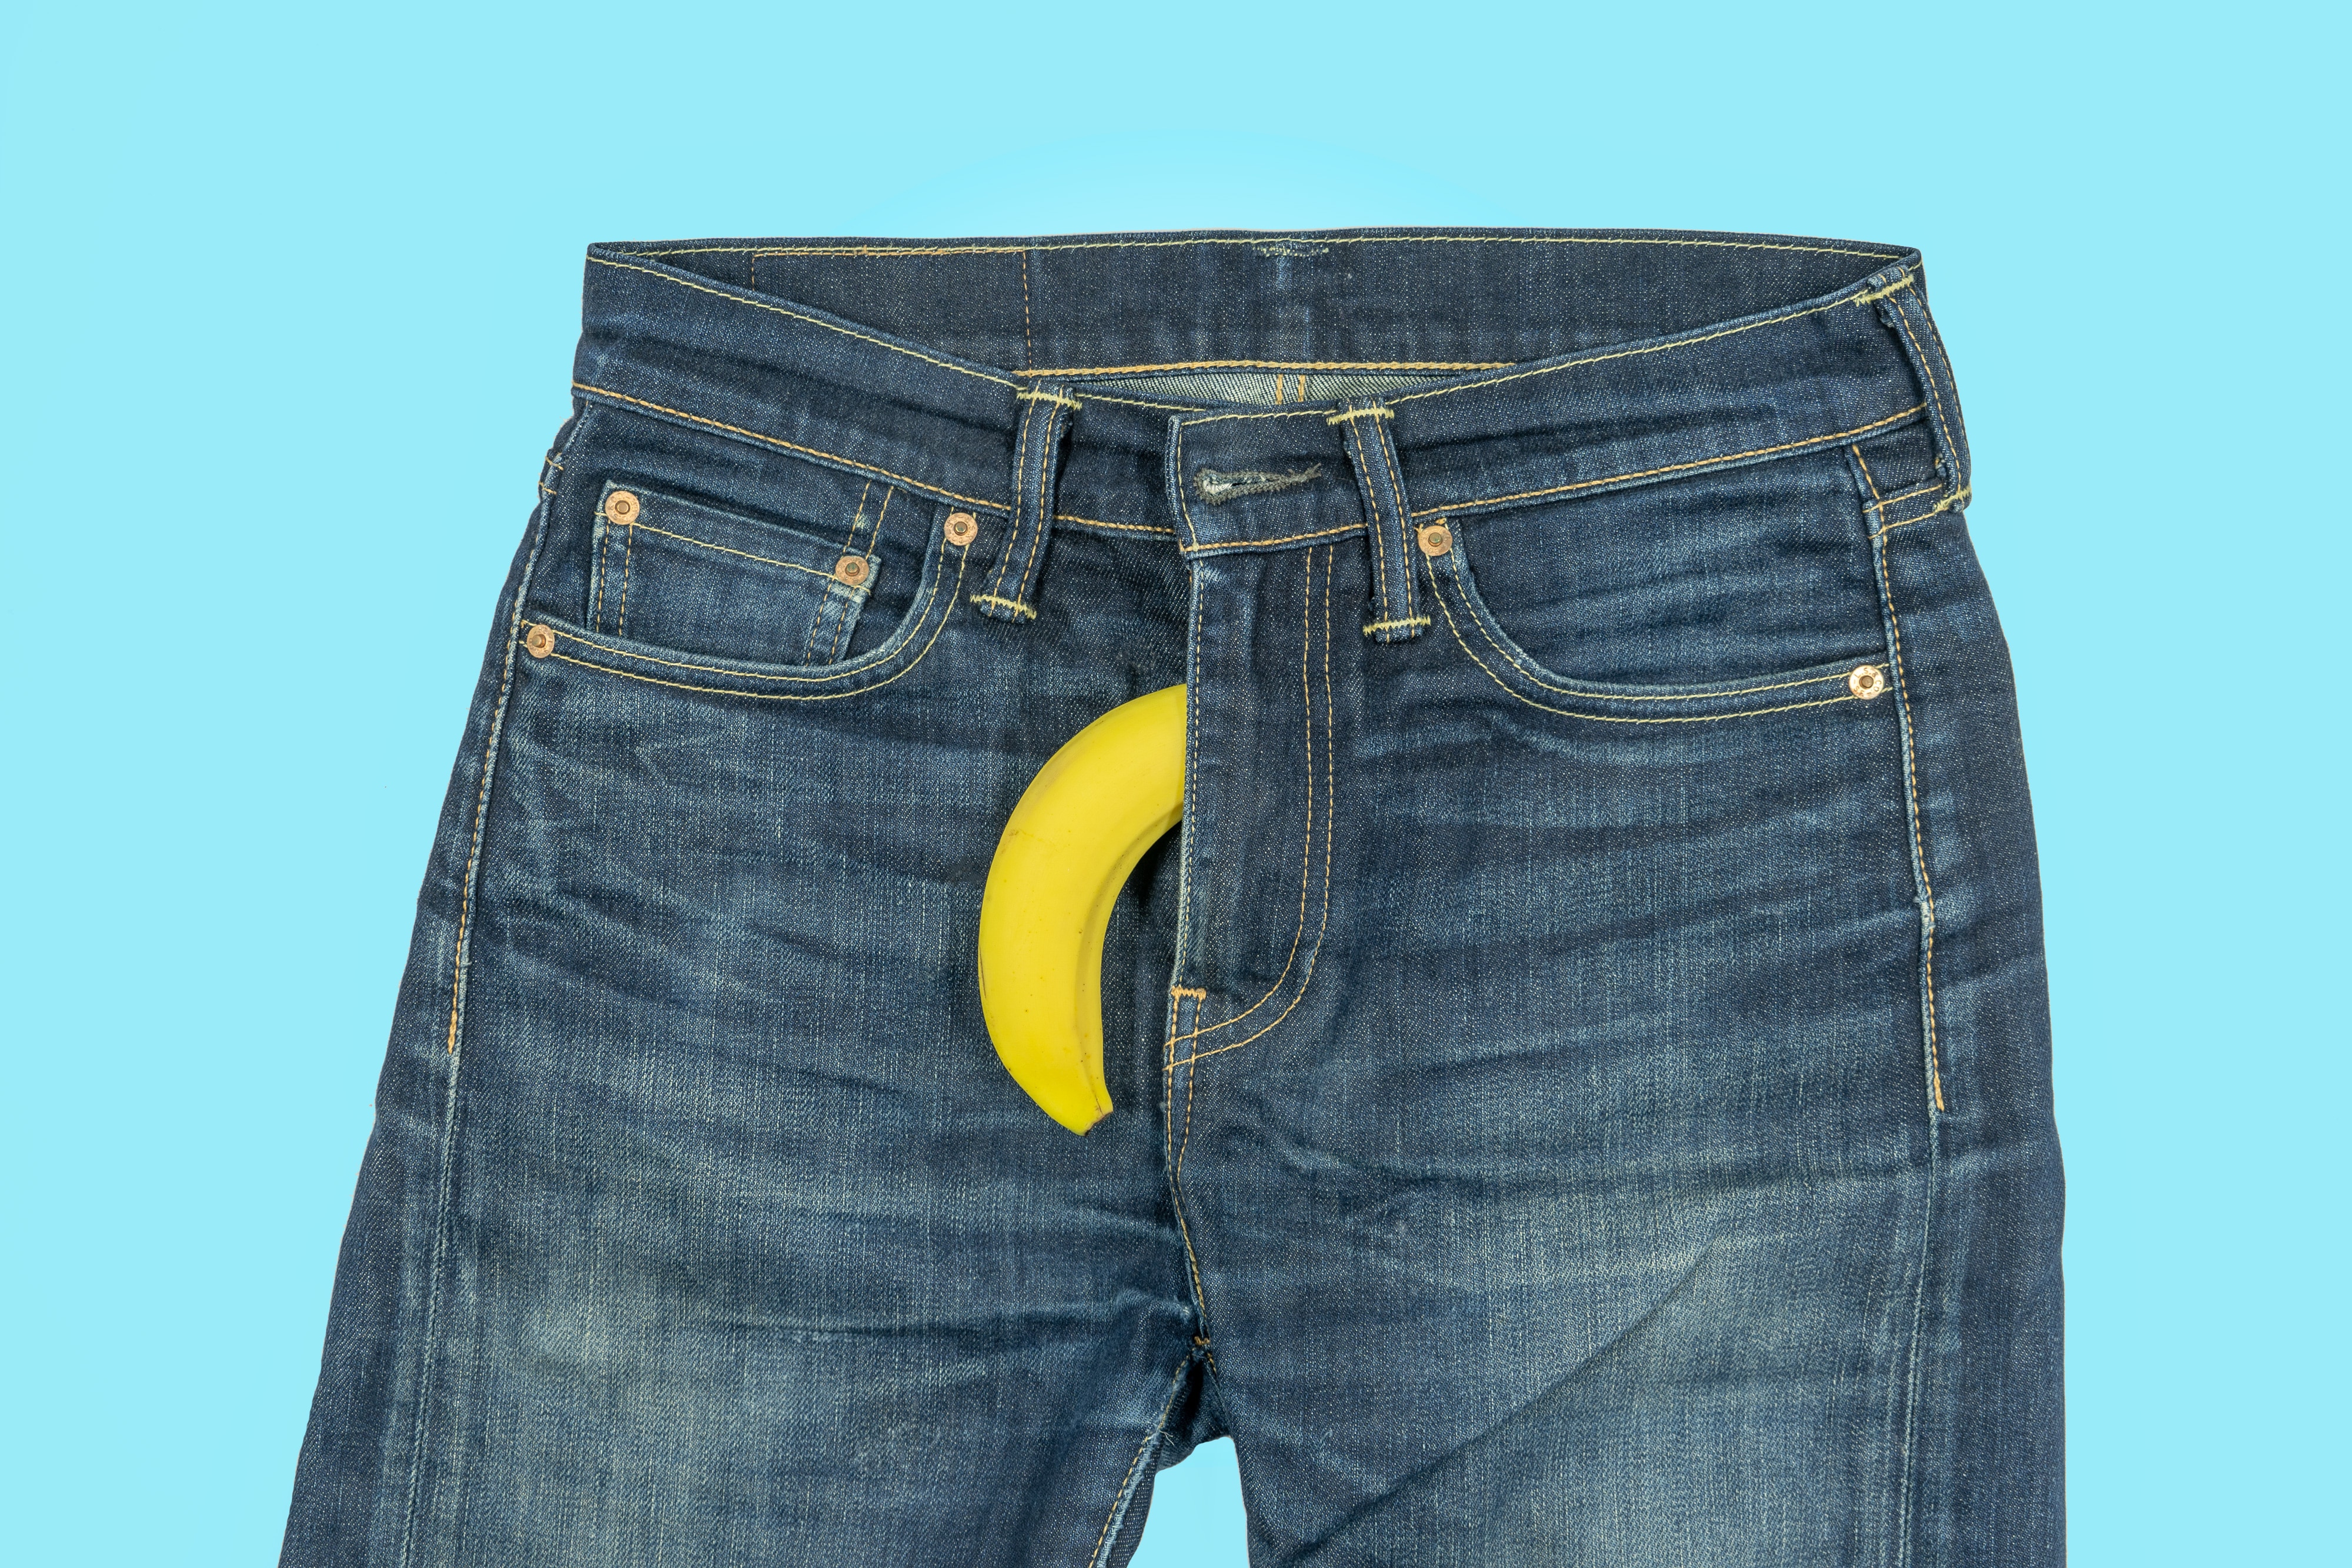 banana in jeans as dick